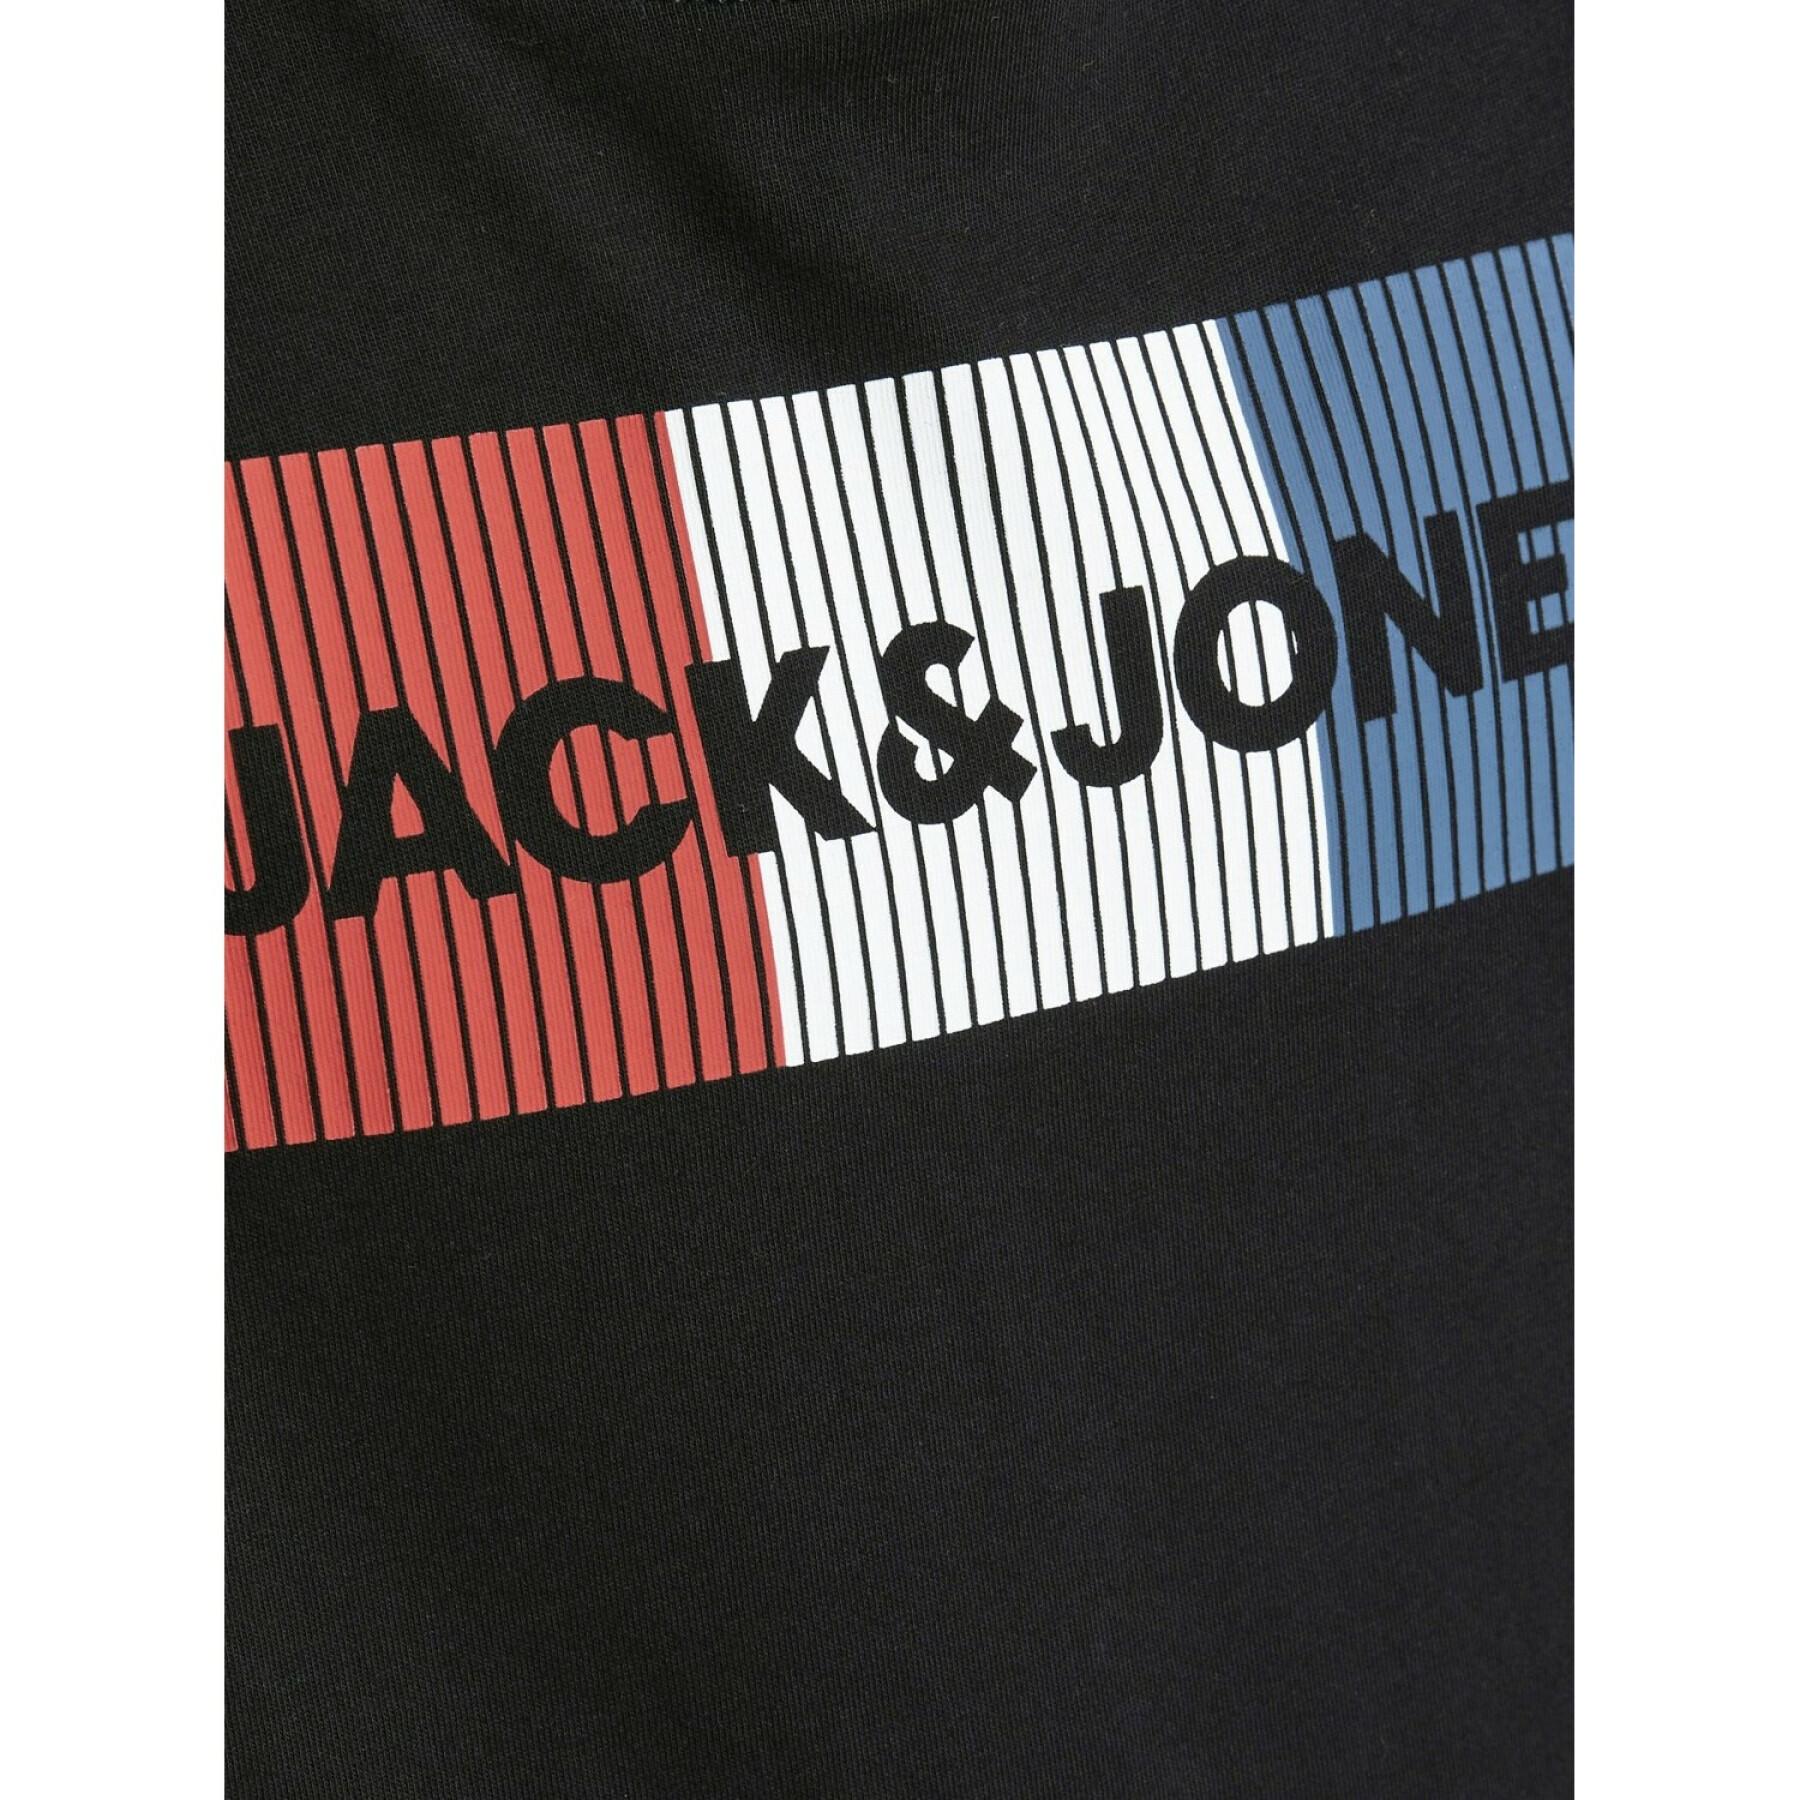 T-Shirt Jack & Jones